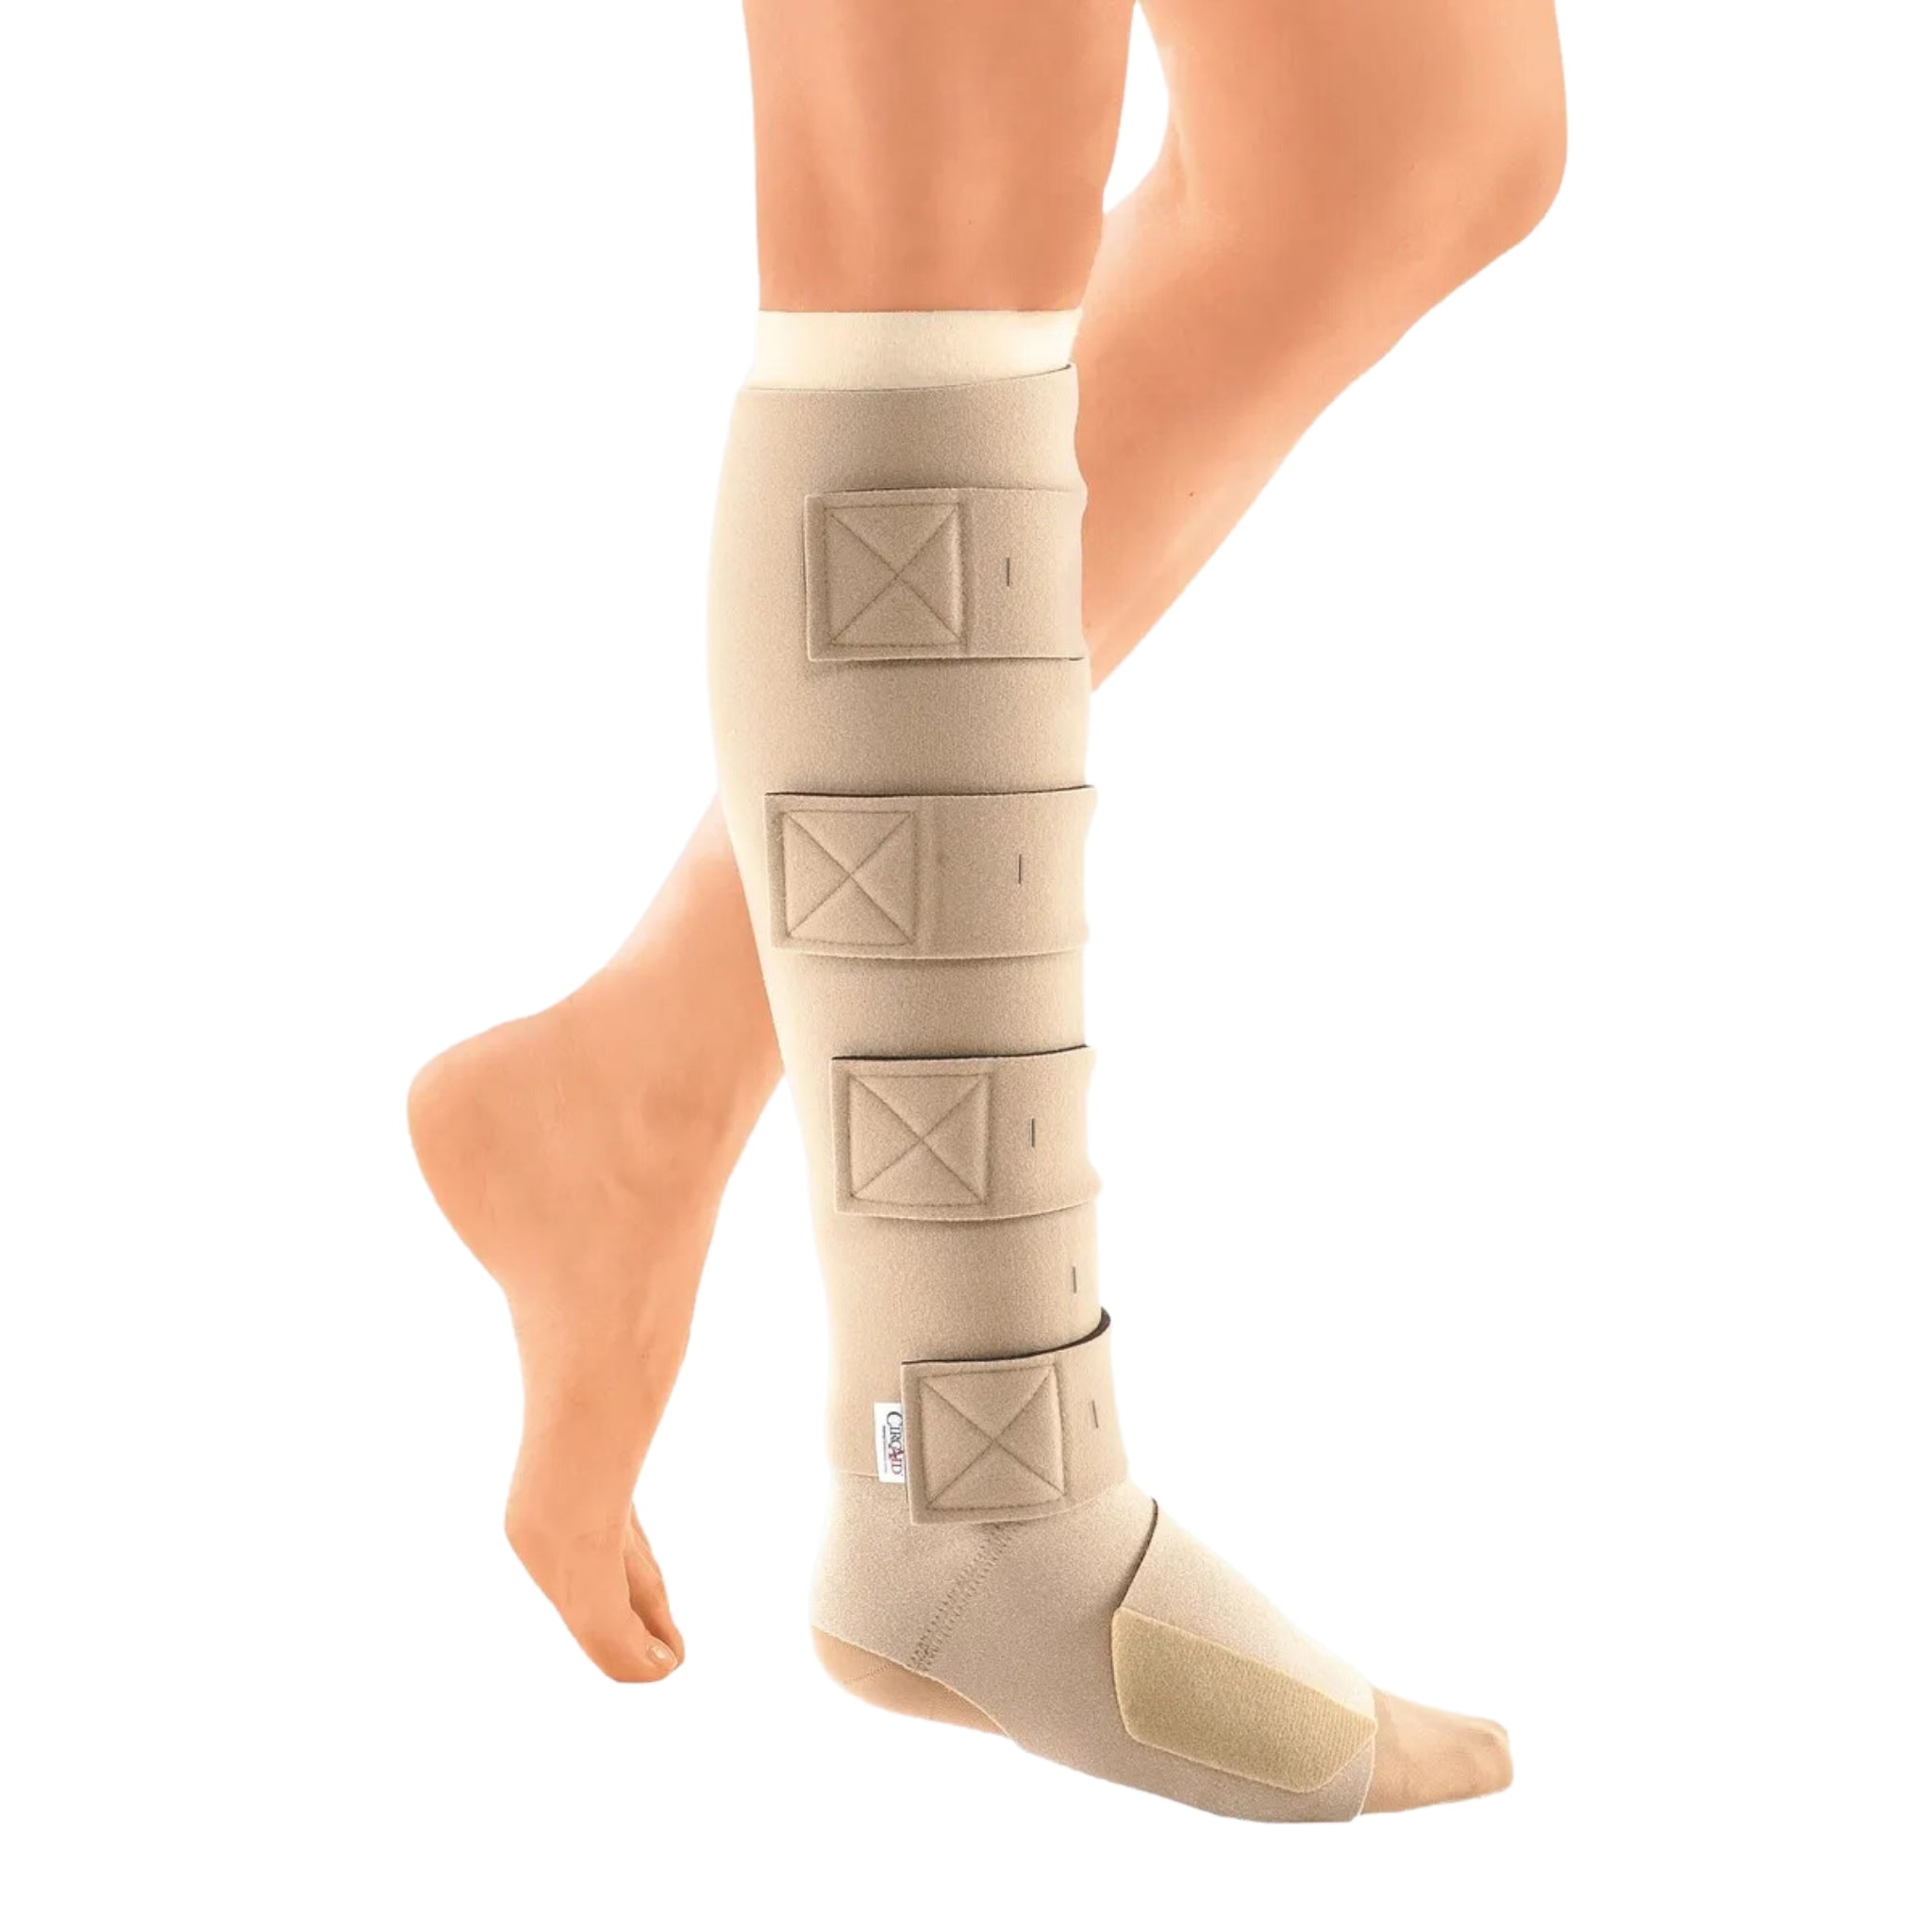 circaid®️ juxtafit®️ Essentials Lower Leg with Compressive Anklets